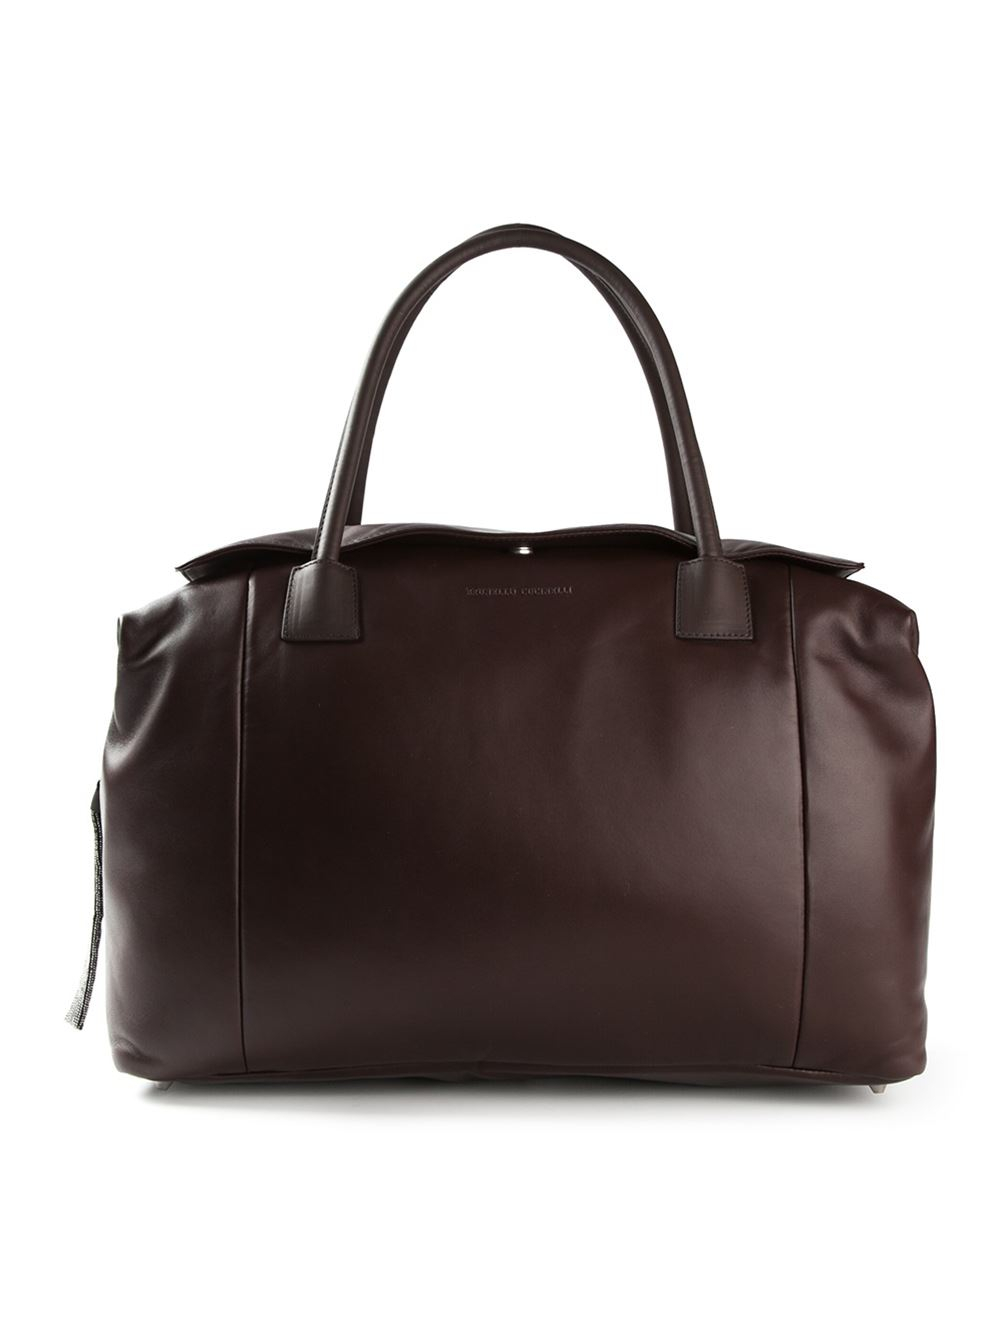 Lyst - Brunello Cucinelli Rectangular Shape Tote Bag in Brown